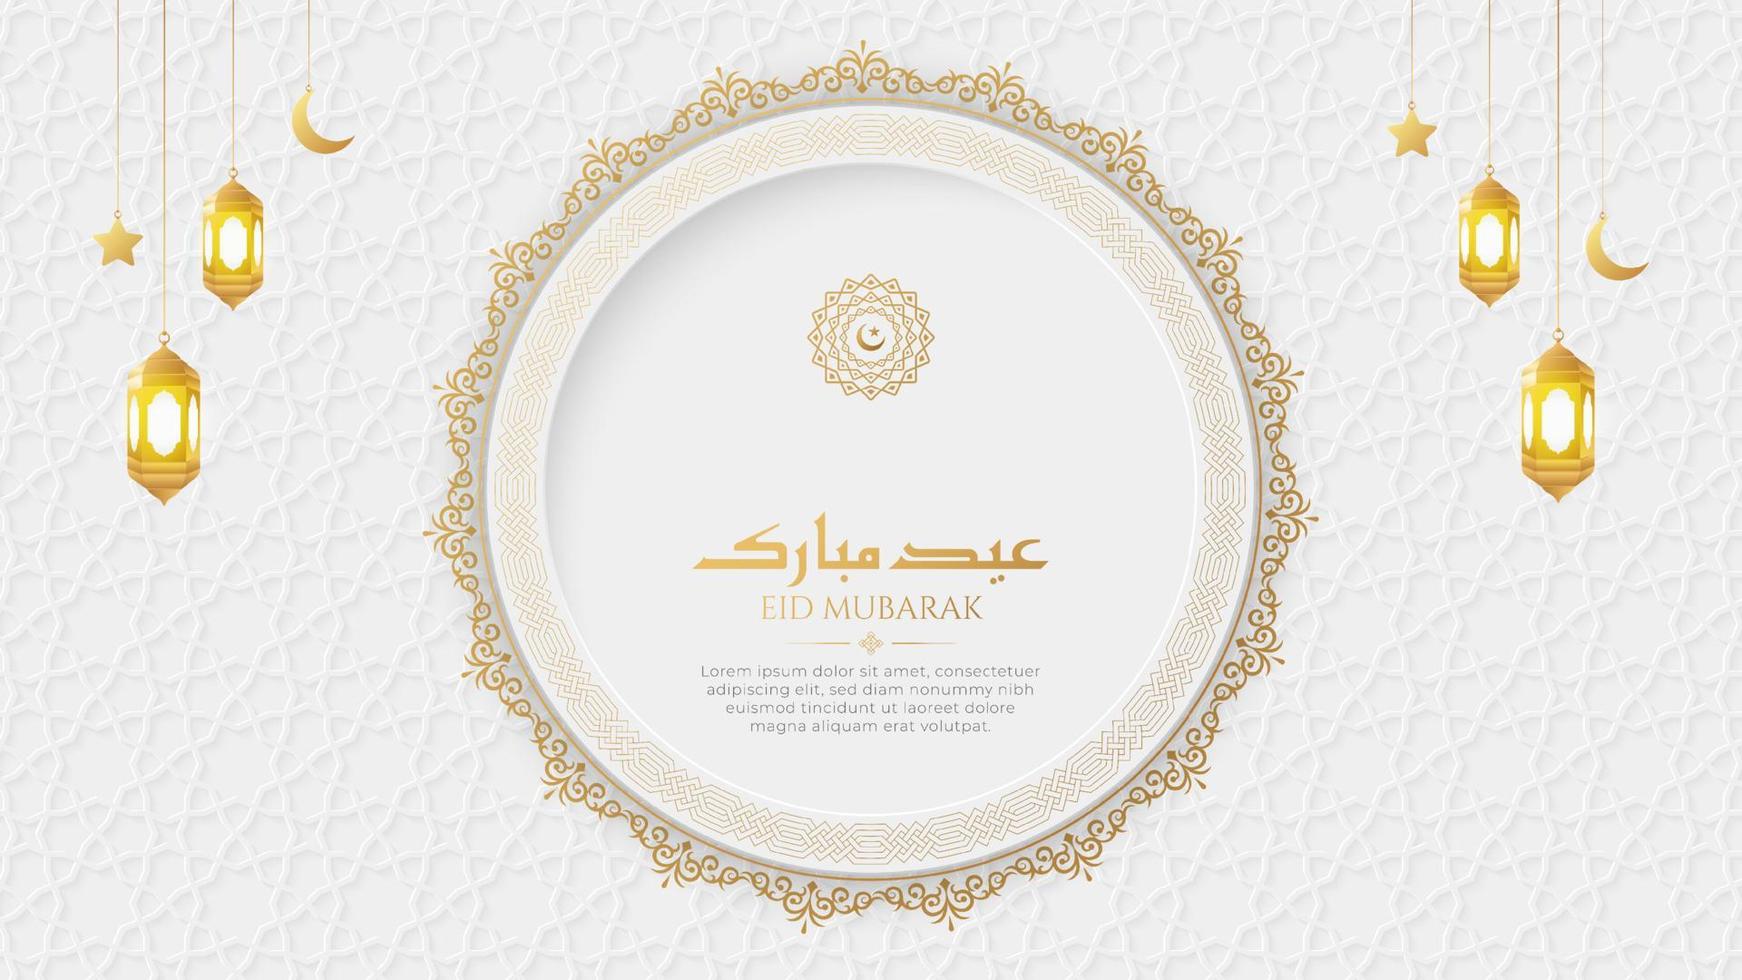 eid mubarak arabicum islamic elegant vit och gyllene lyx dekorativ gräns bakgrund med arabicum mönster vektor